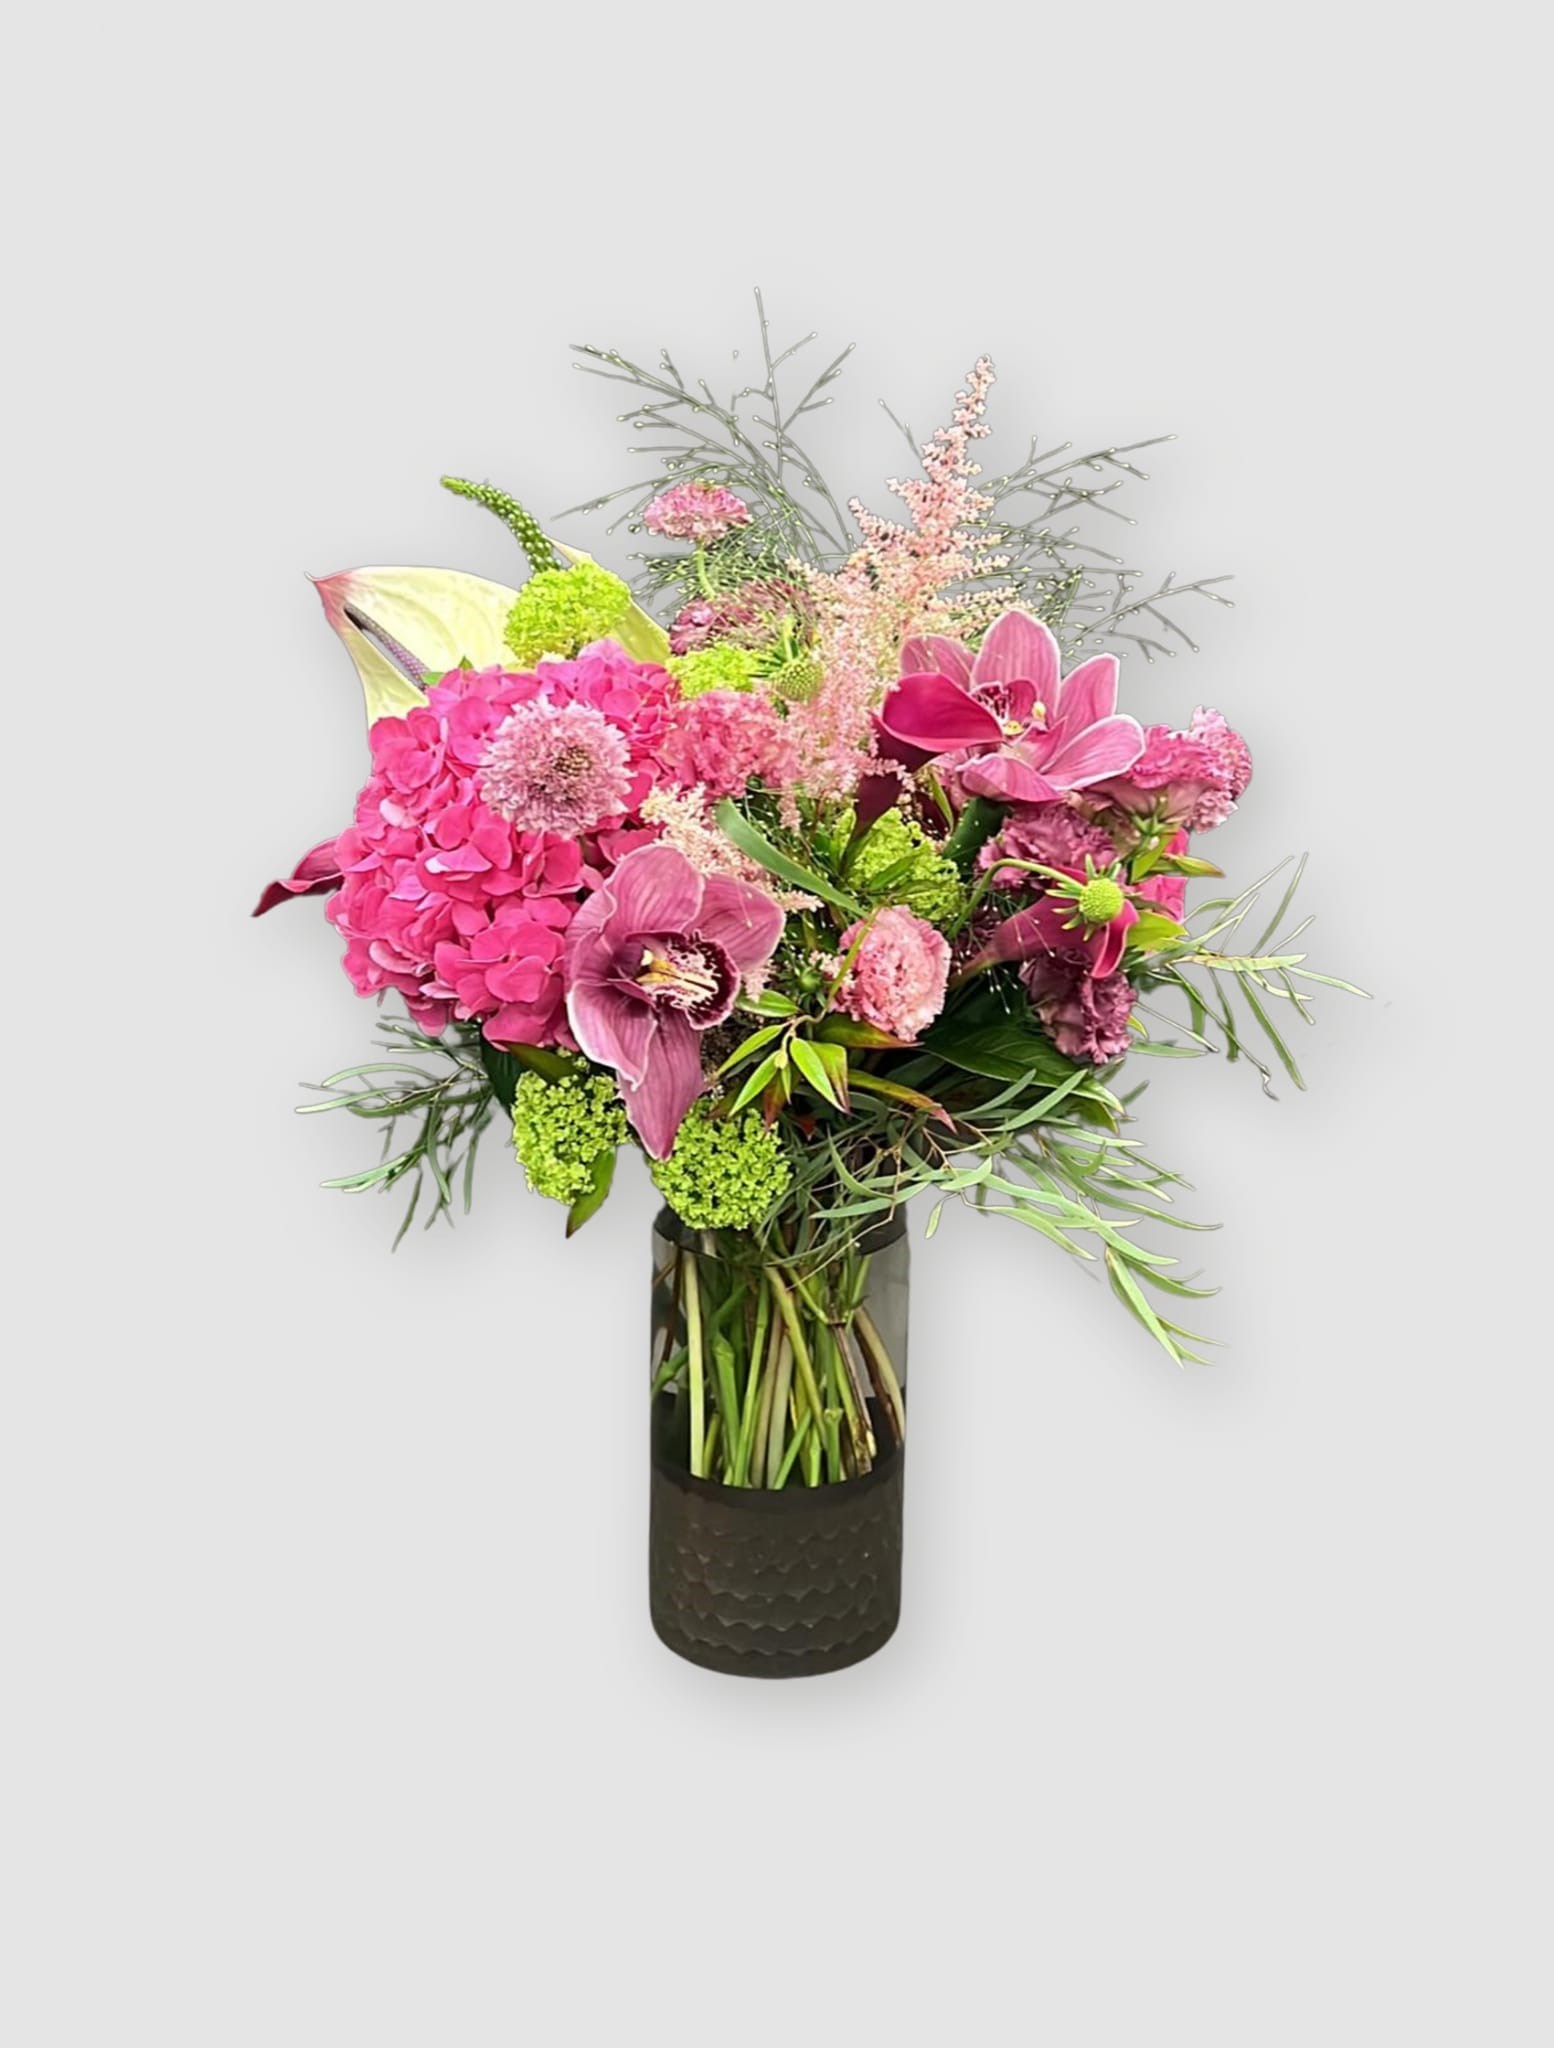 Assorted Flowers in Vase